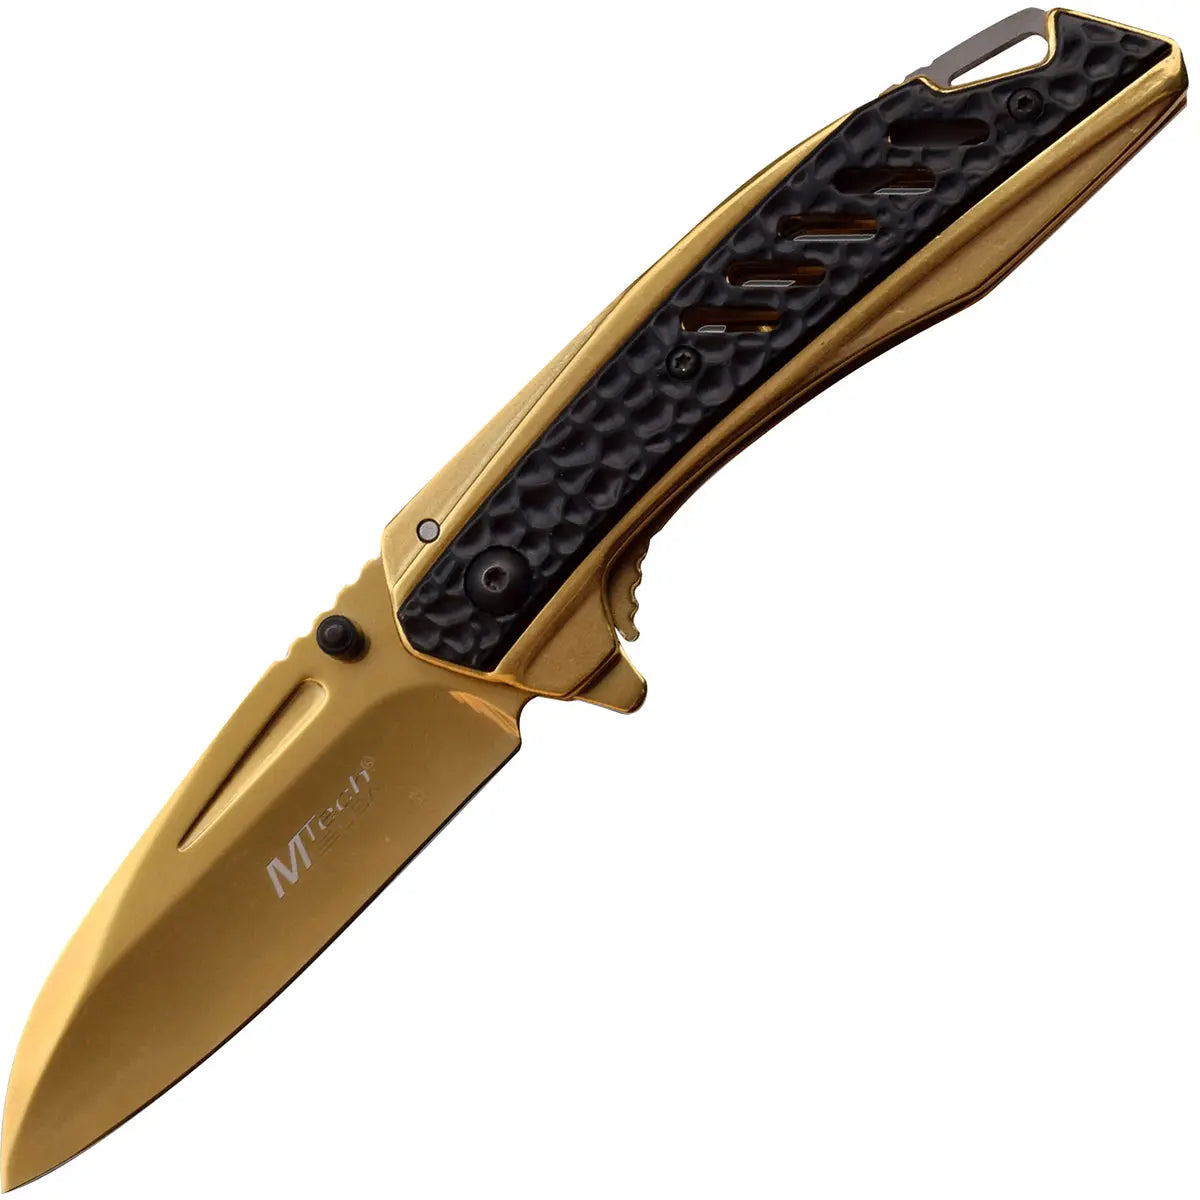 MTech USA Framelock Spring Assisted Folding Knife, 3.25" Blade, Gold, MT-A1133GD M-Tech